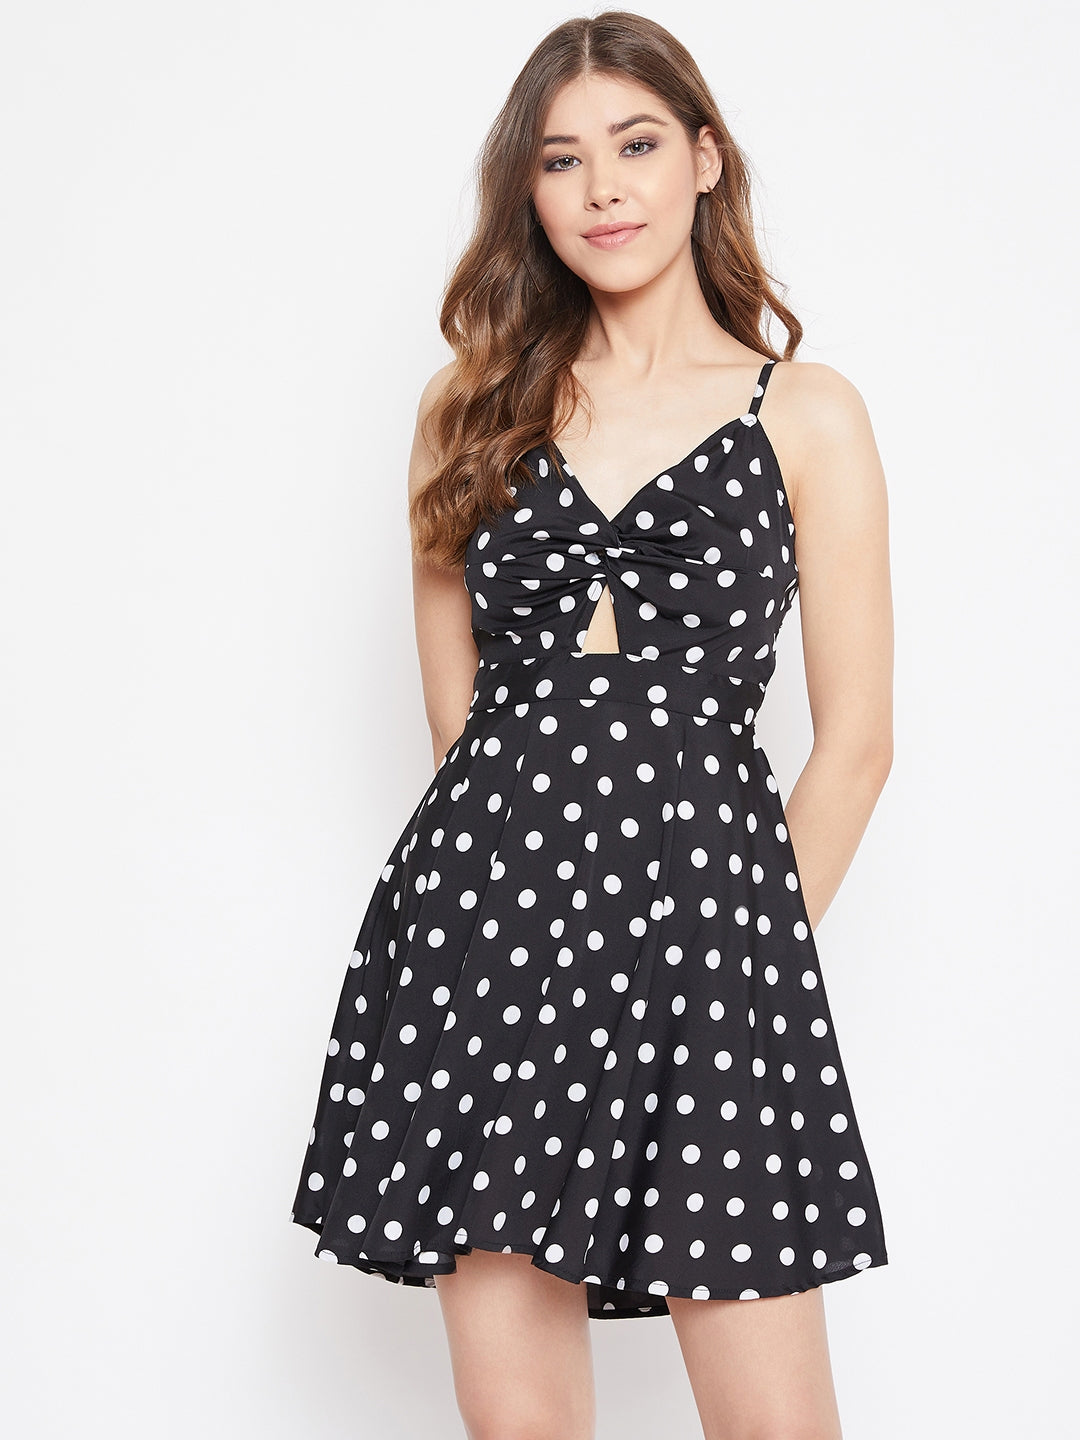 Berrylush Women Black Polka Dot Printed Front Twisted Fit & Flare Mini Dress